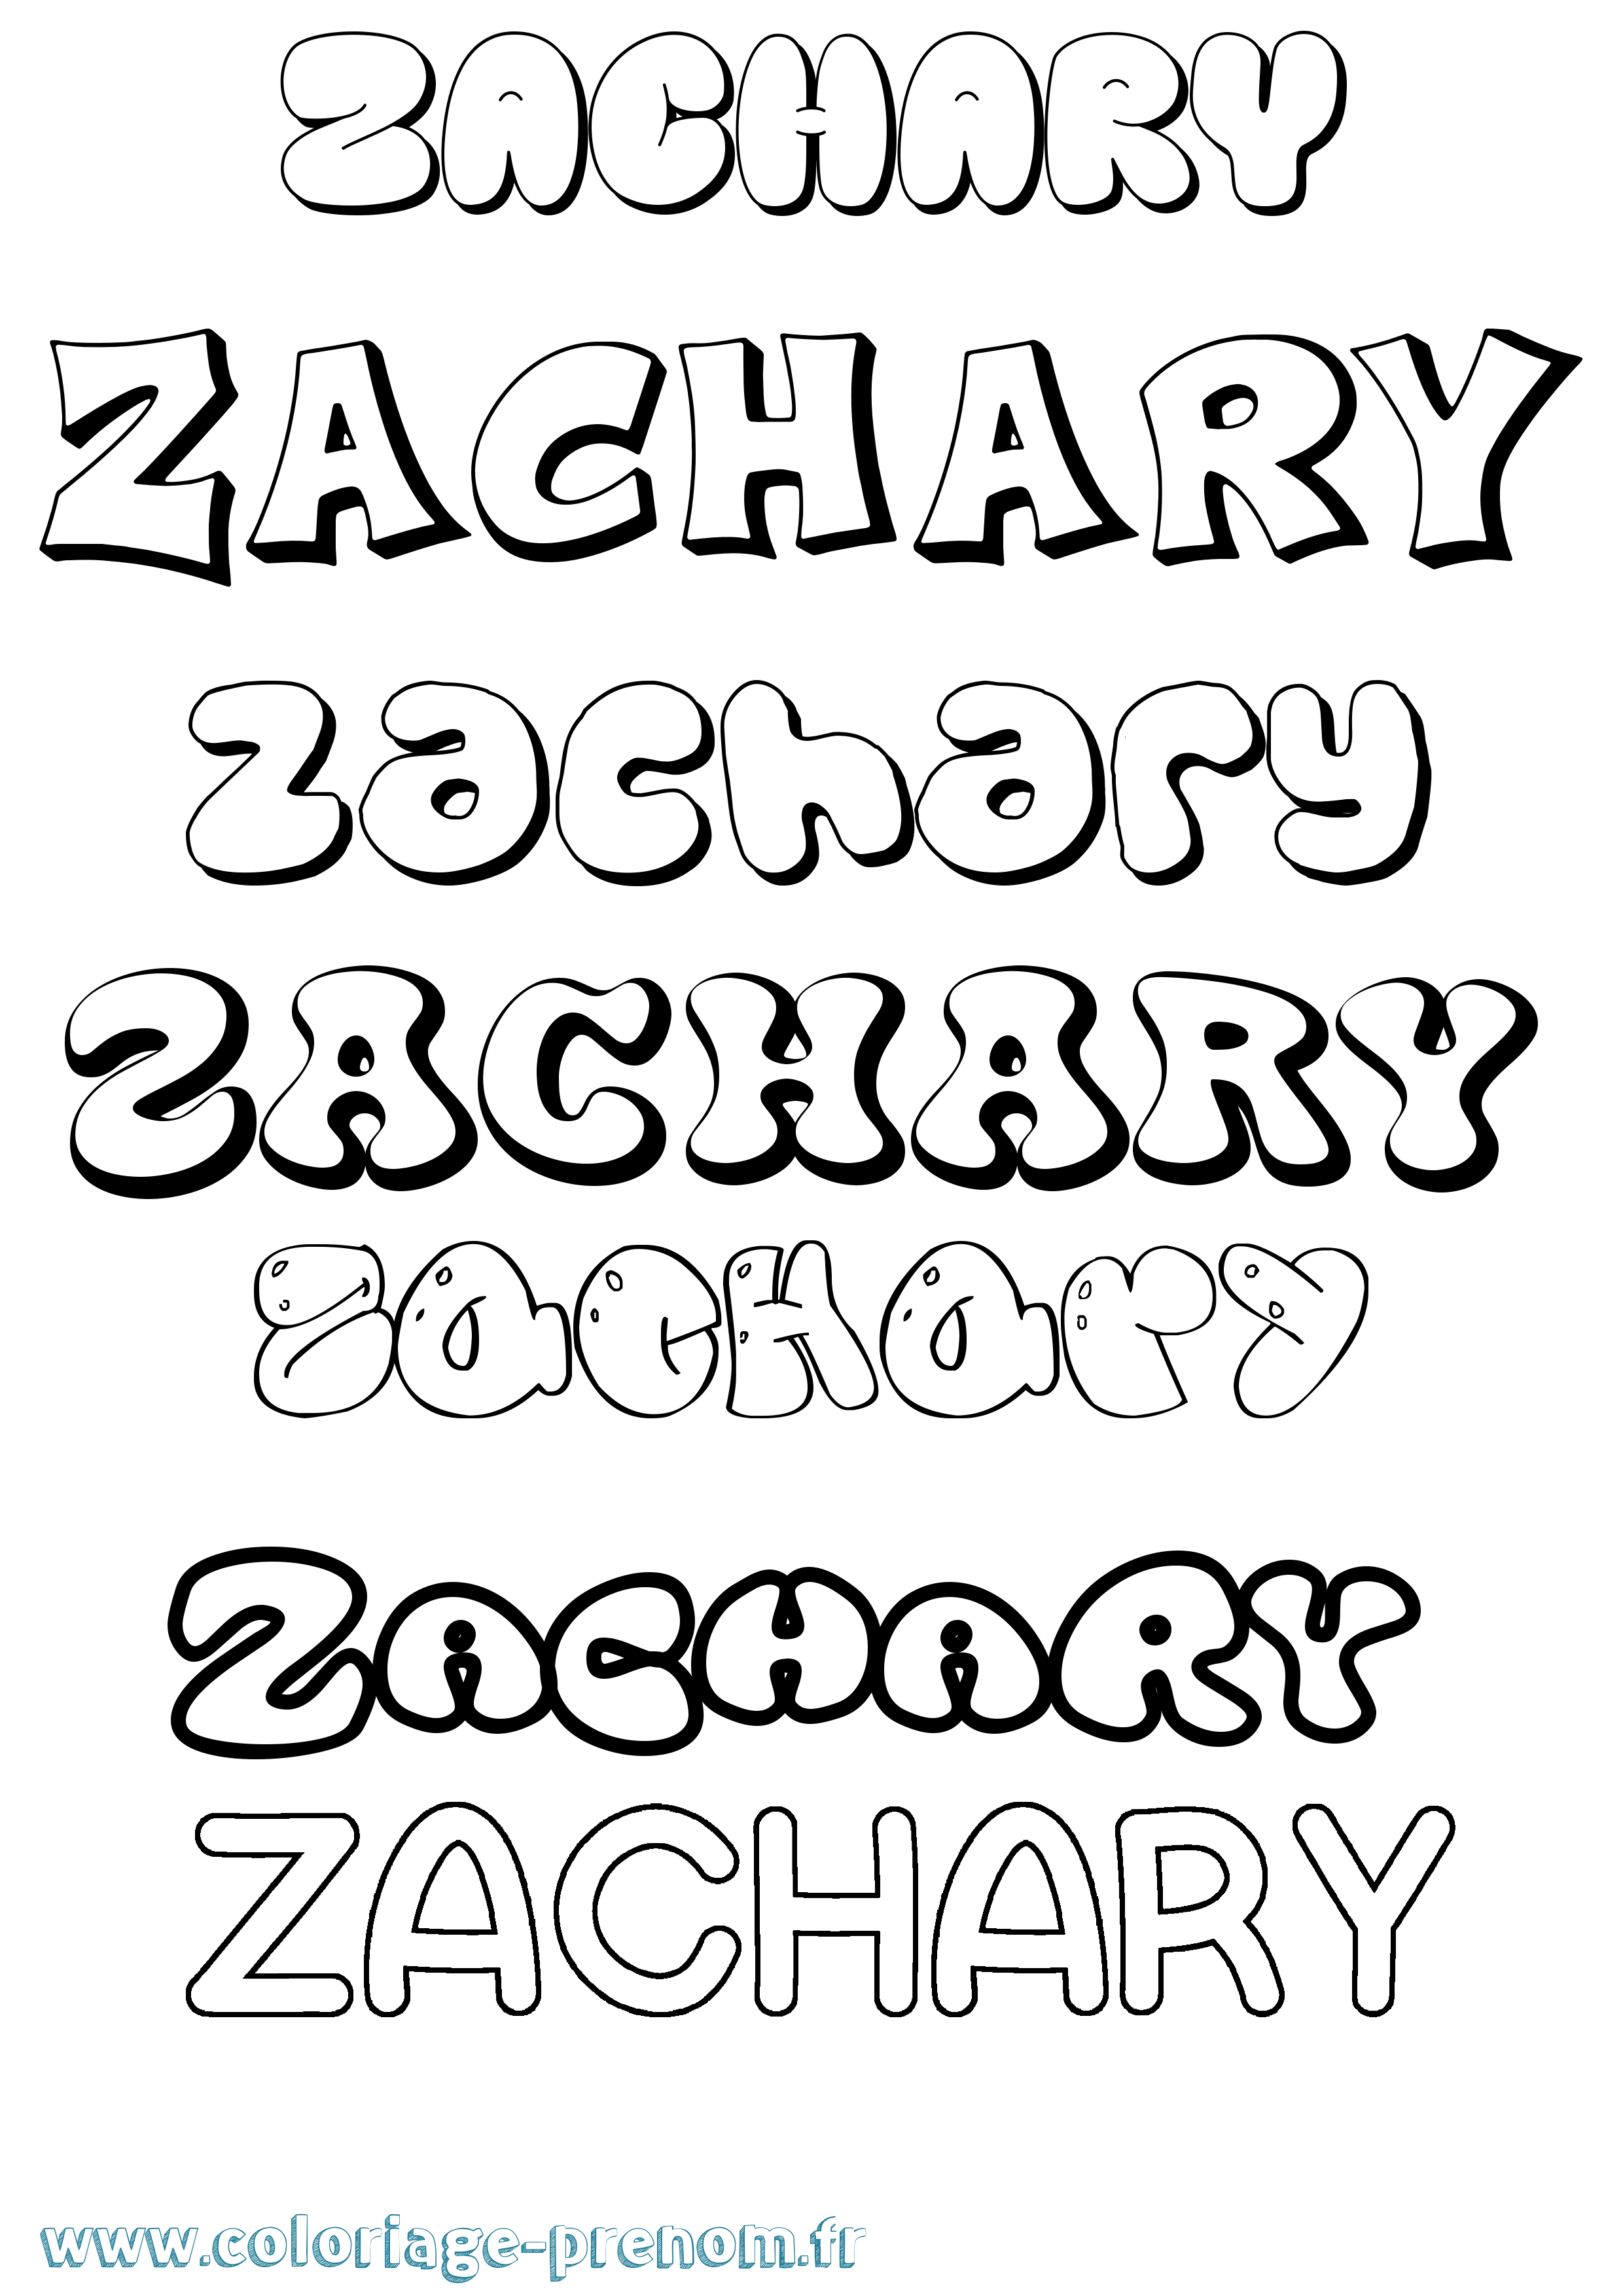 Coloriage prénom Zachary Bubble